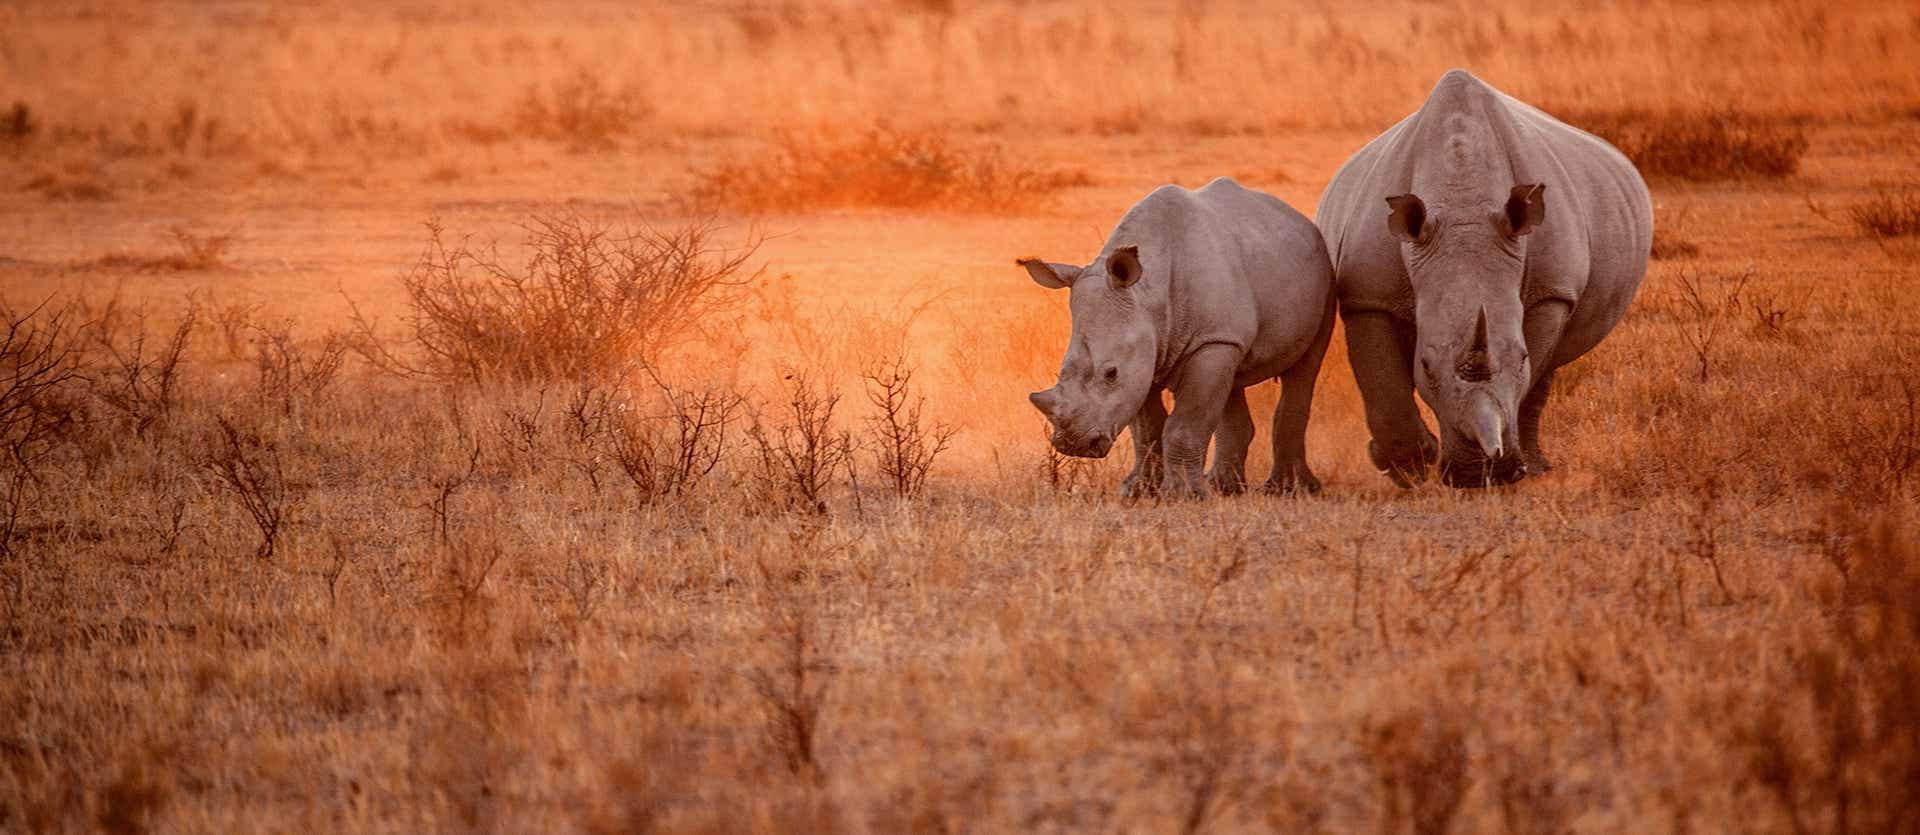 Rhinos in Moremi Game Reserve <span class="iconos separador"></span> Okavango Delta <span class="iconos separador"></span> Botswana